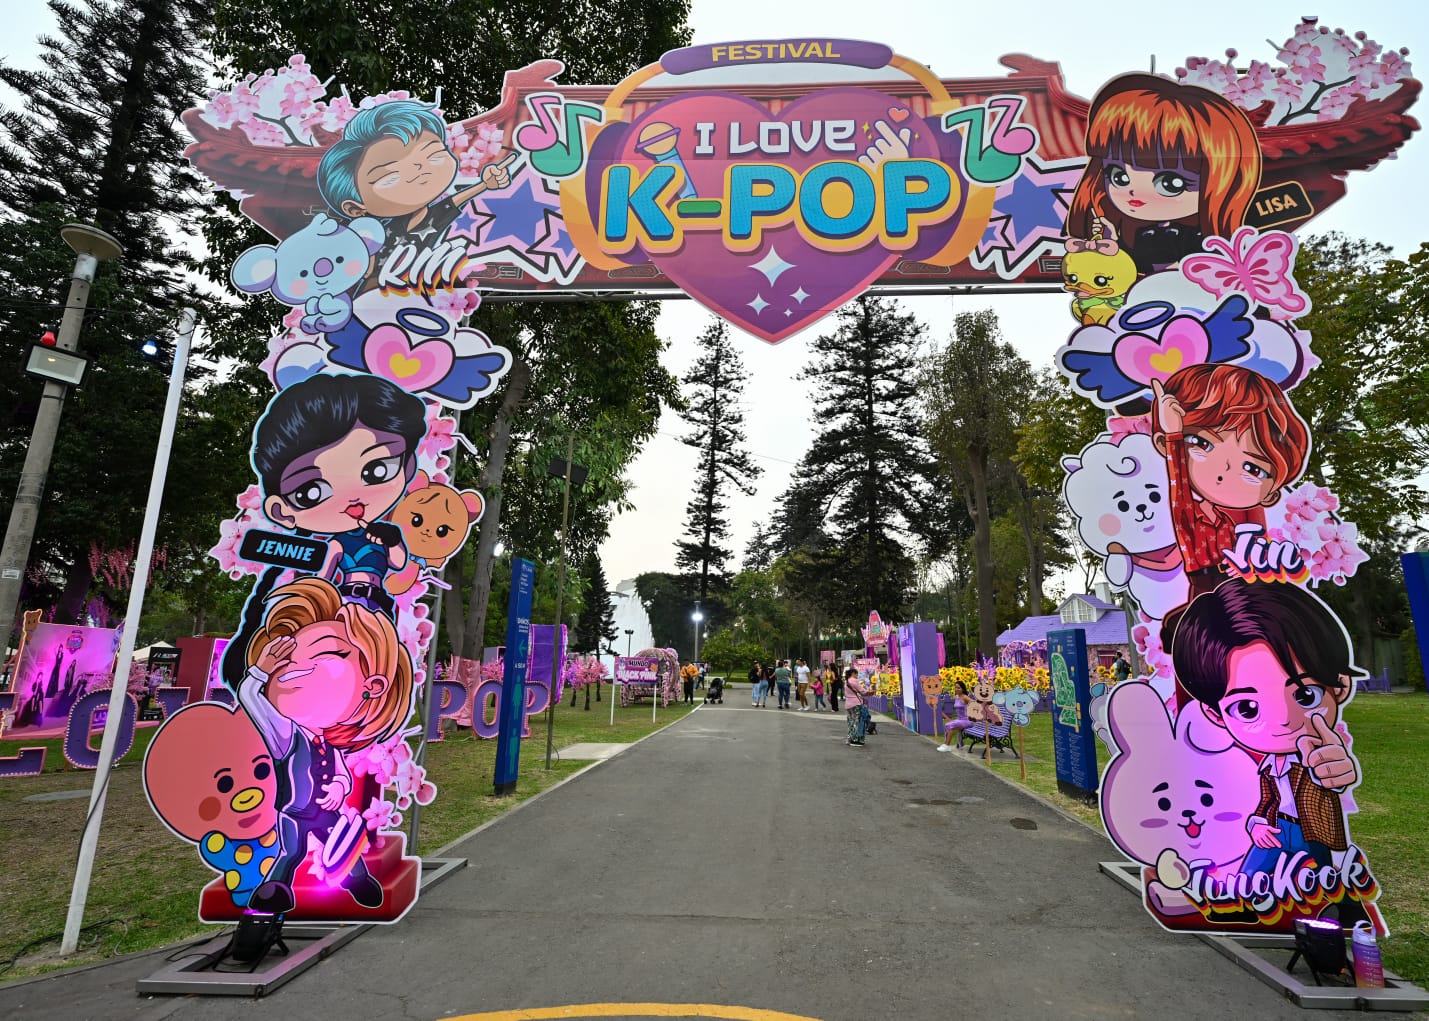 Festival I love K-pop